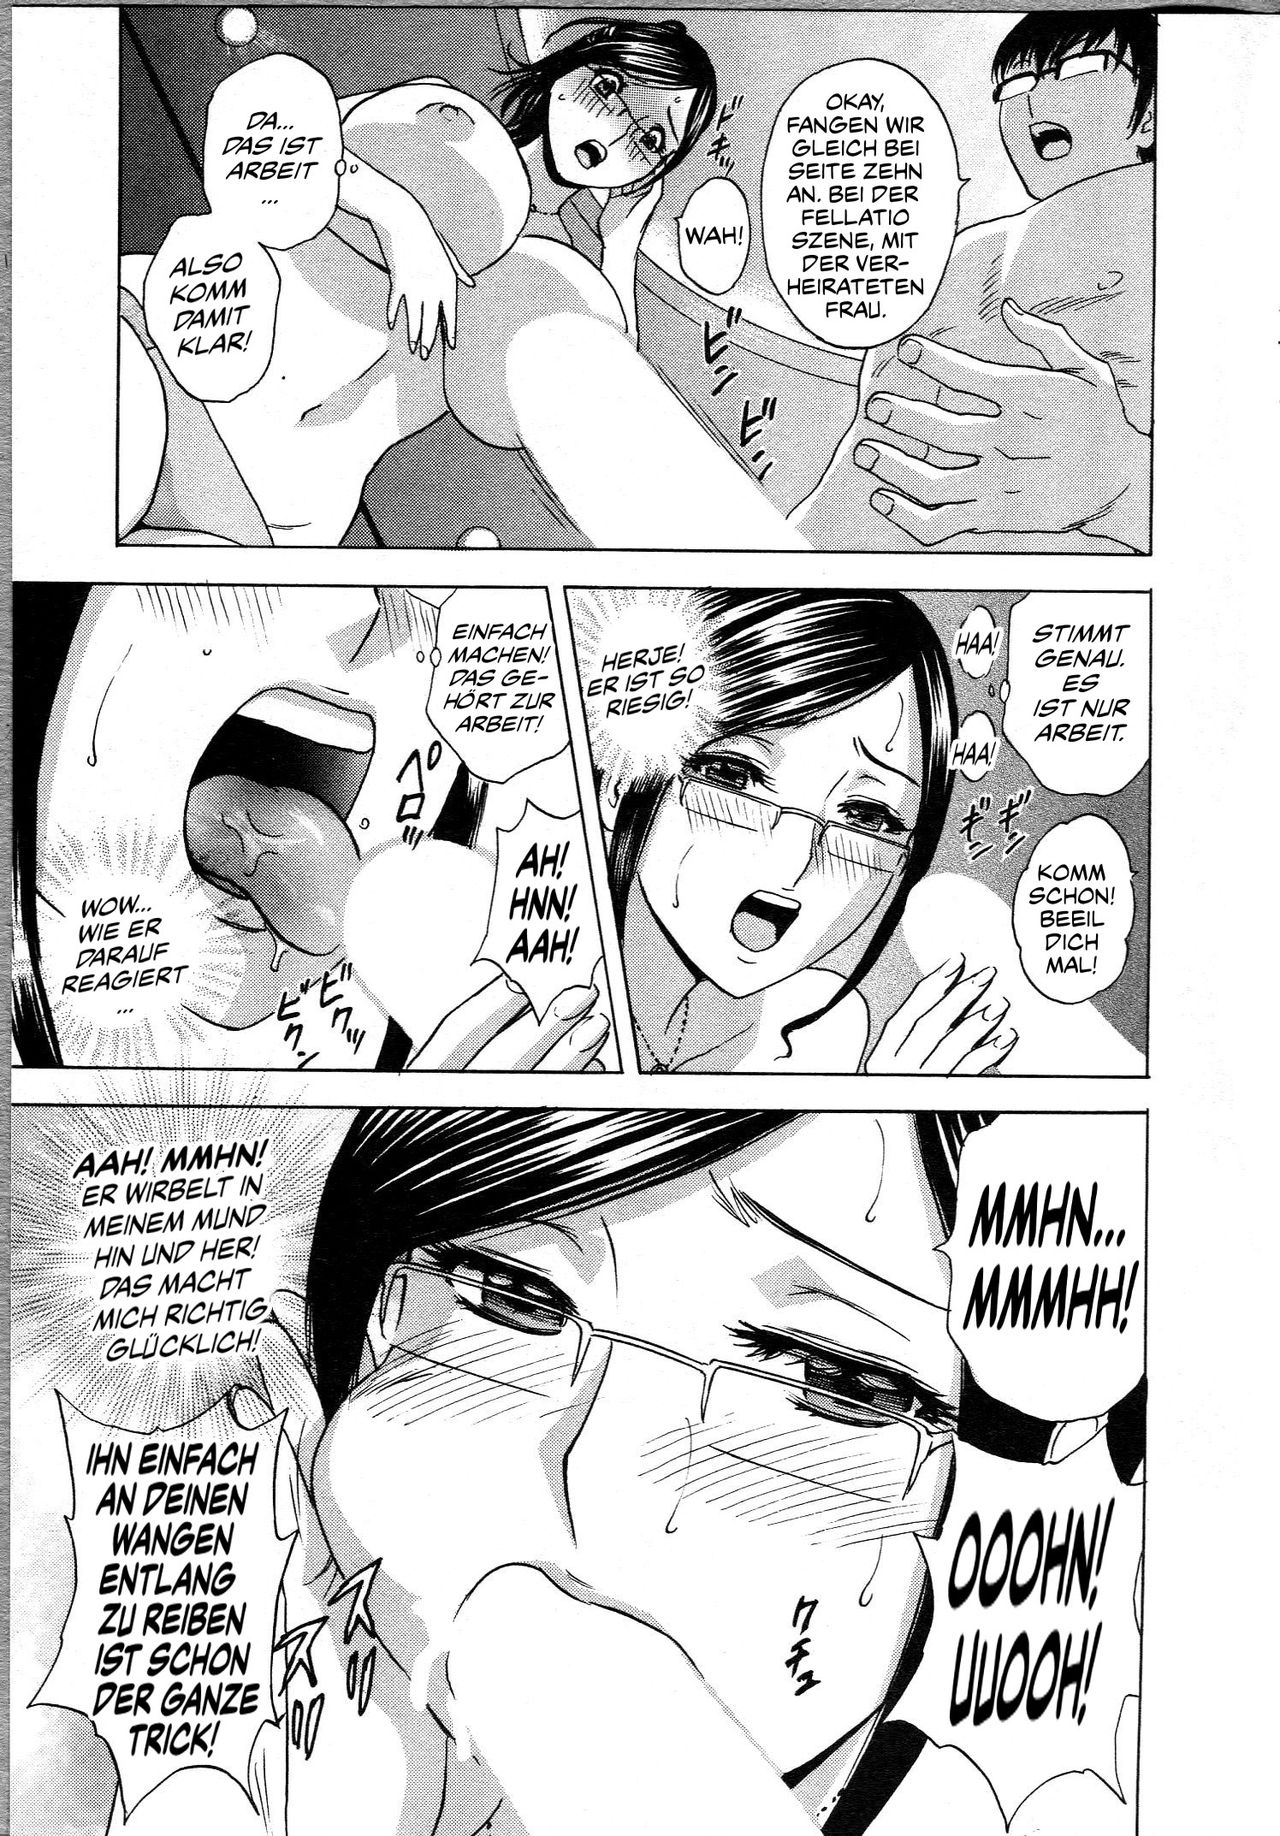 [Hidemaru] Eroina Hitoduma - Manga no youna Hitozuma to no Hibi 2 | Life with Married Women Just Like a Manga 2 [German] [SchmidtSST] 16